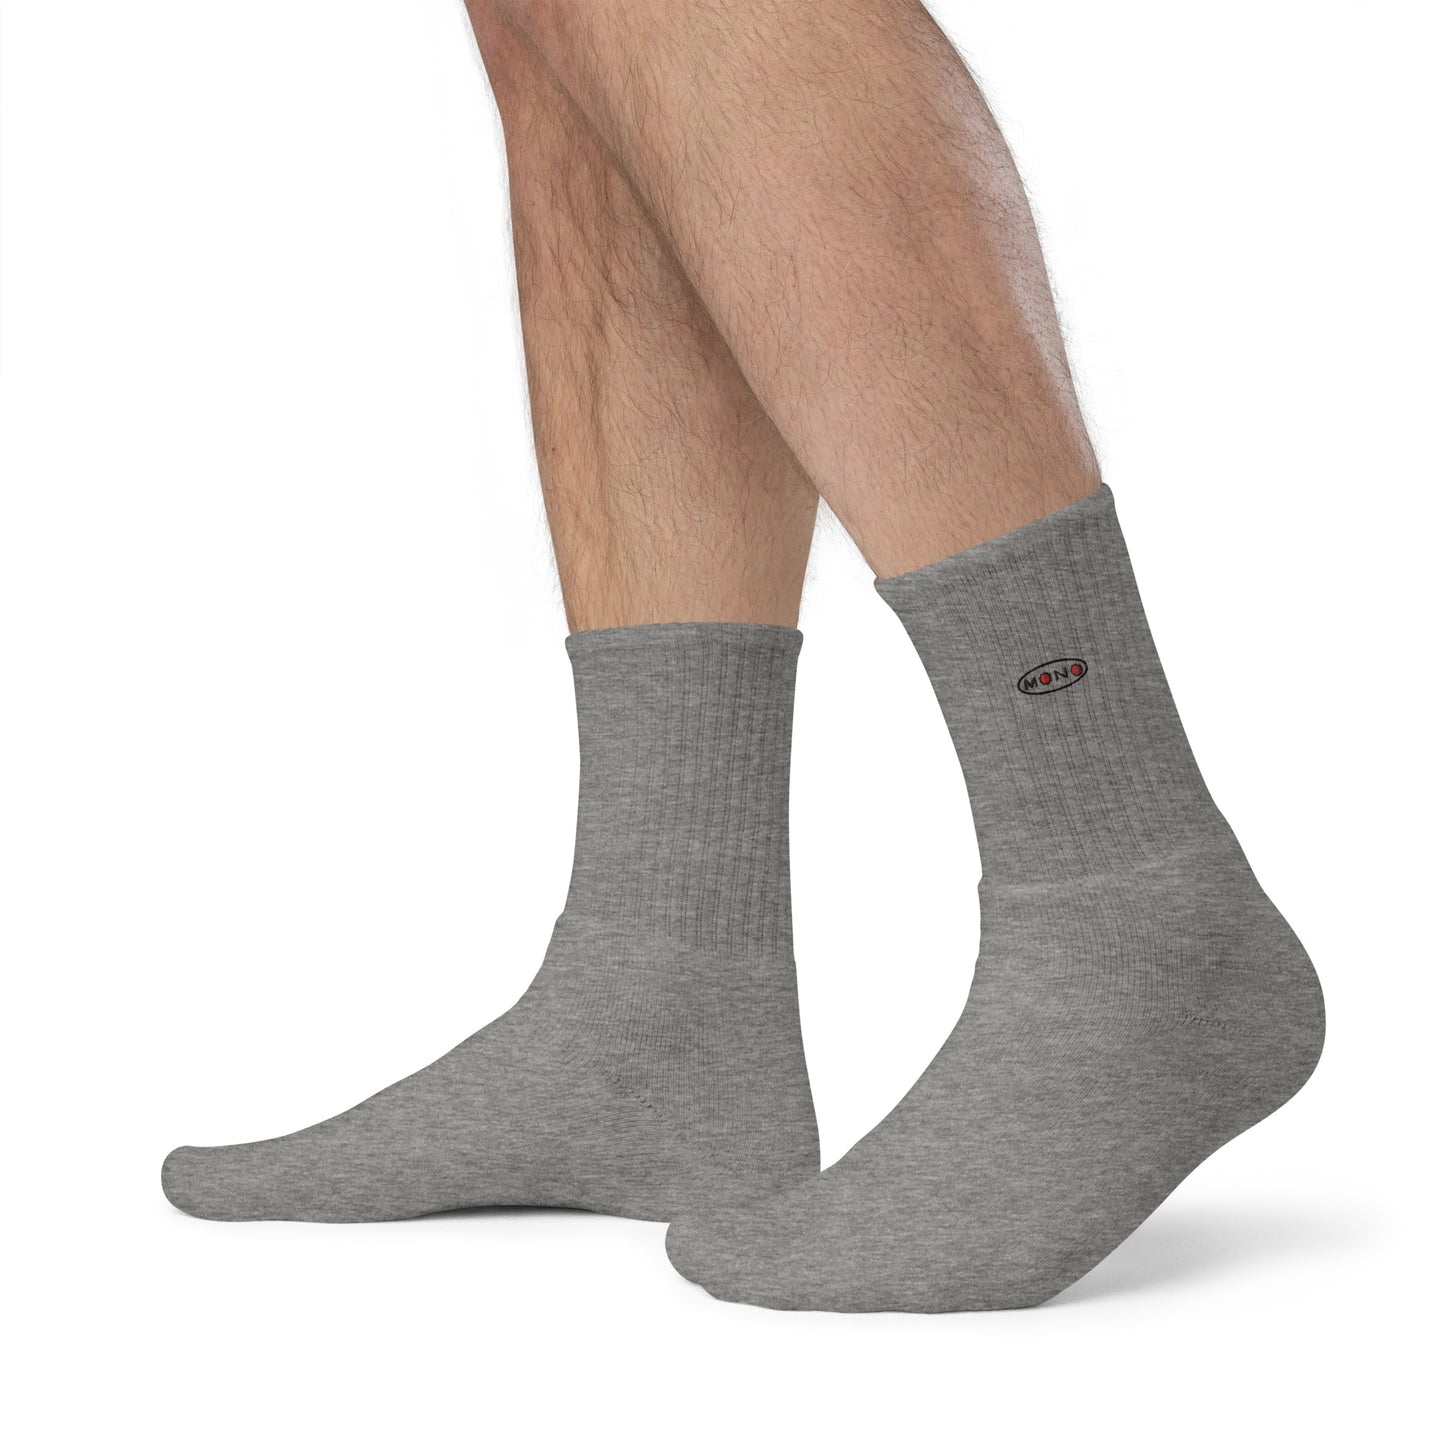 Mono Logo Embroidered Socks